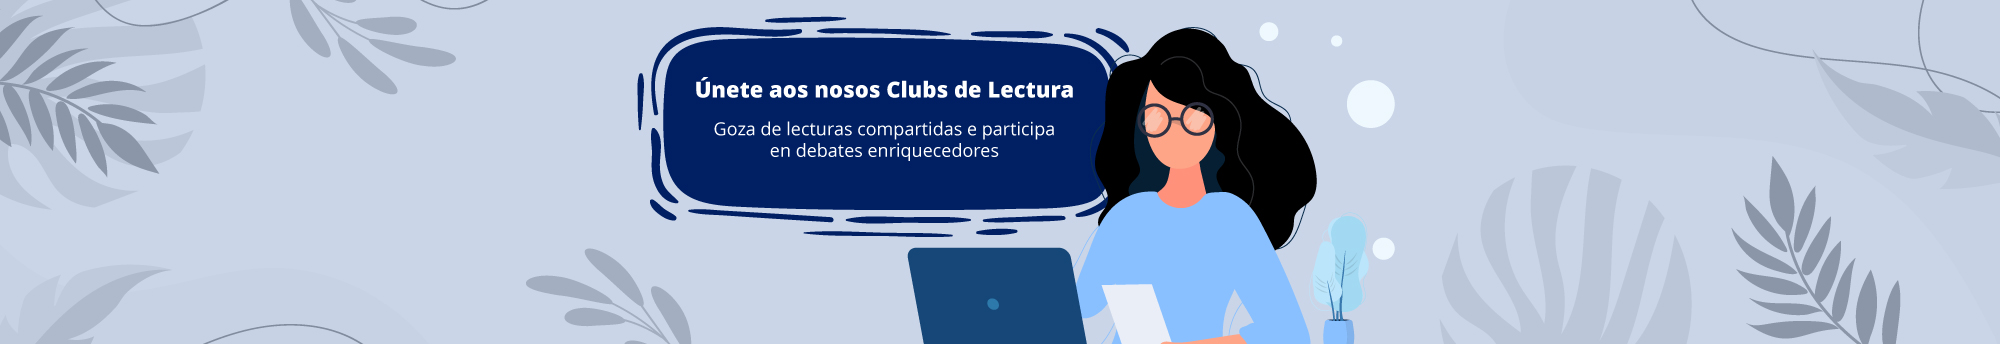 IM_banners_club_lectura_relanzamiento_diputacion_coruna_20240415.jpg